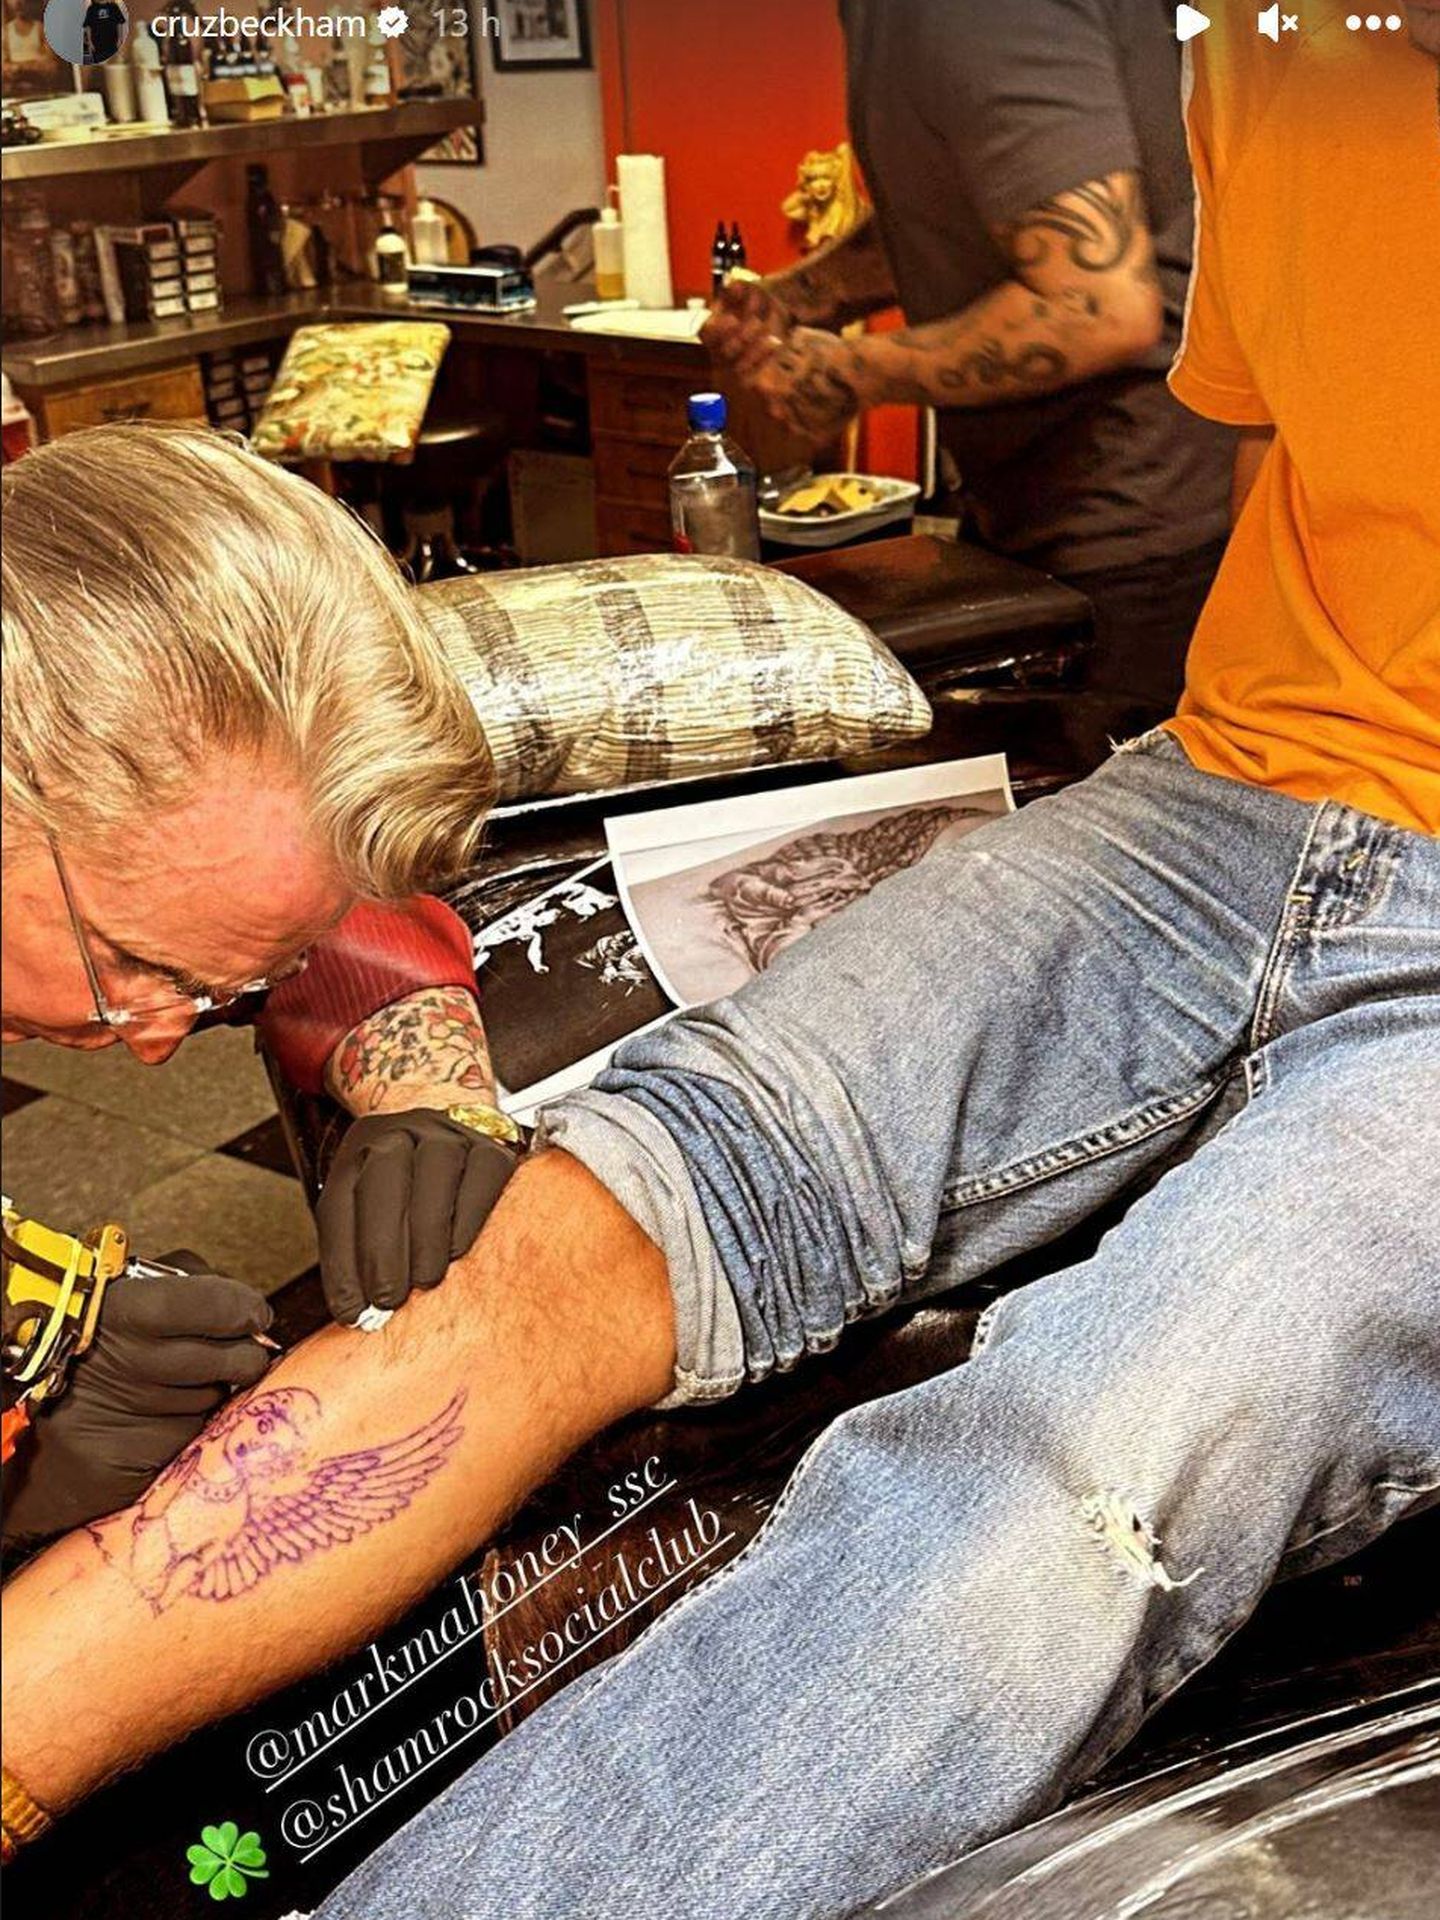 El último tatuaje de Cruz Beckham, de hace unas horas: un ángel. (Instagram/@cruzbeckham)